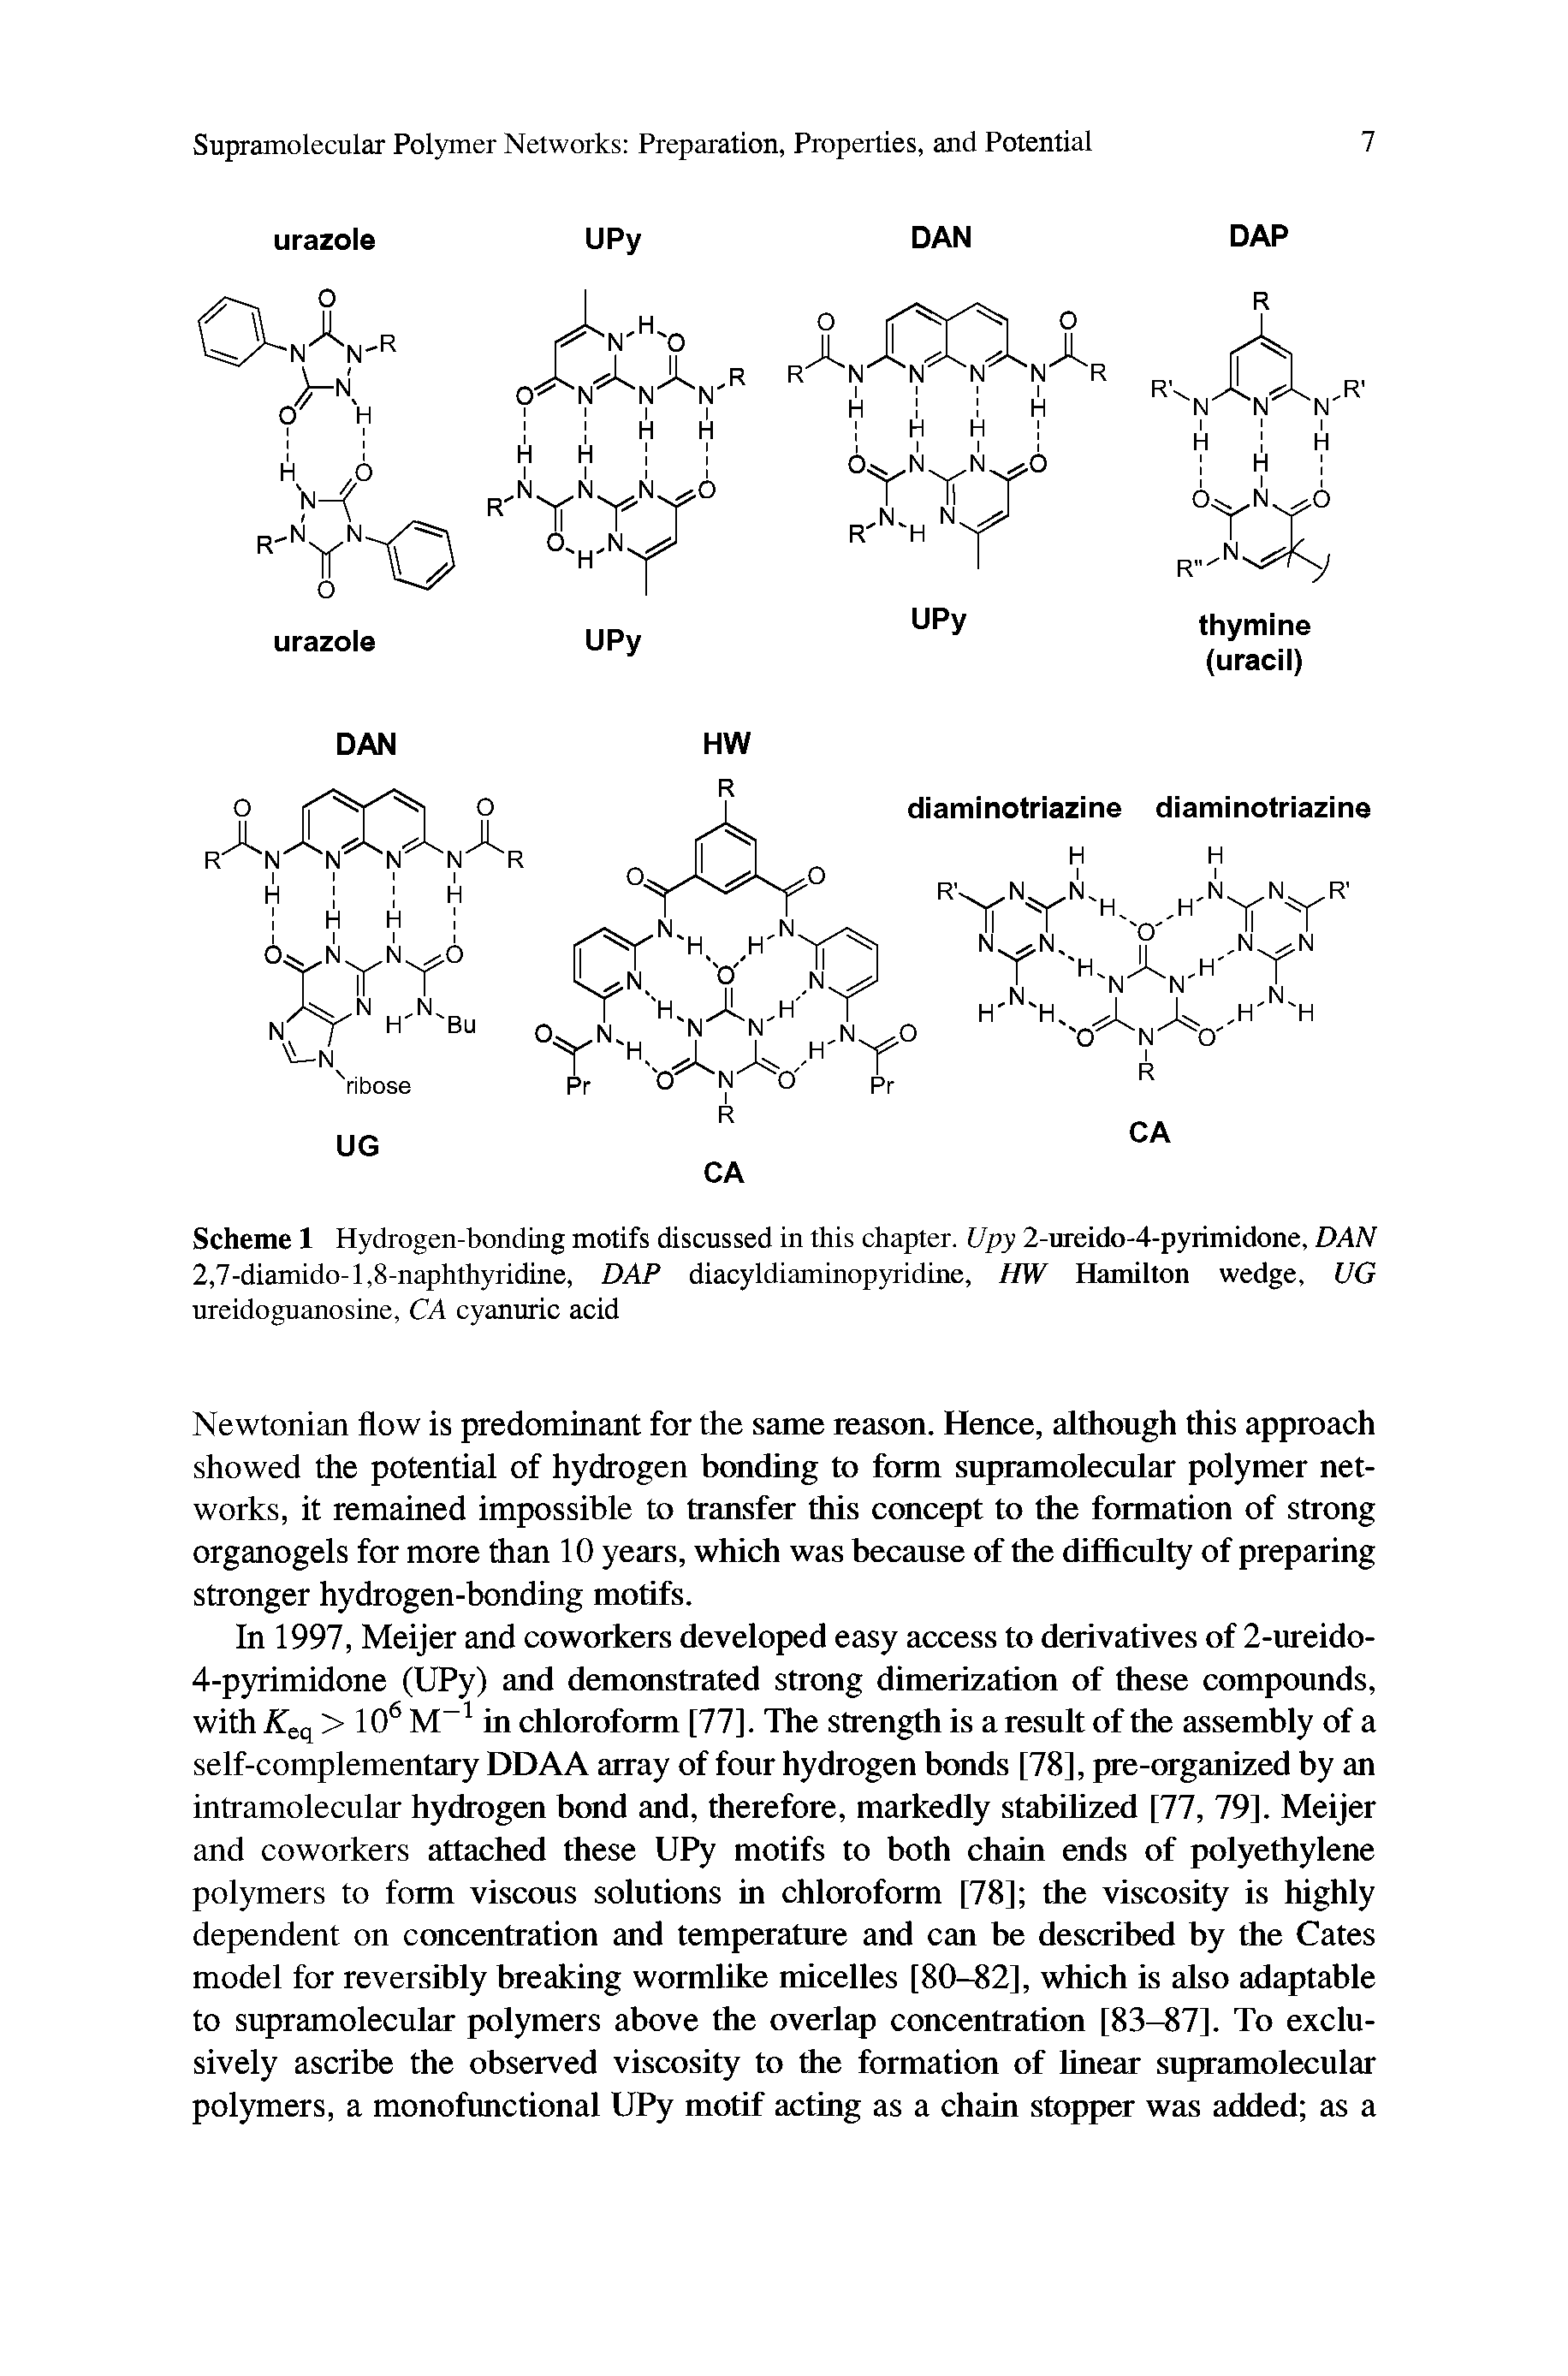 Scheme 1 Hydrogen-bonding motifs discussed in this chapter. Upy 2-ureido-4-pyrimidone, DAN 2,7-diamido-l,8-naphthyridine, DAP diacyldiaminopyridine, HW Hamilton wedge, UG ureidoguanosine, CA cyanuric acid...